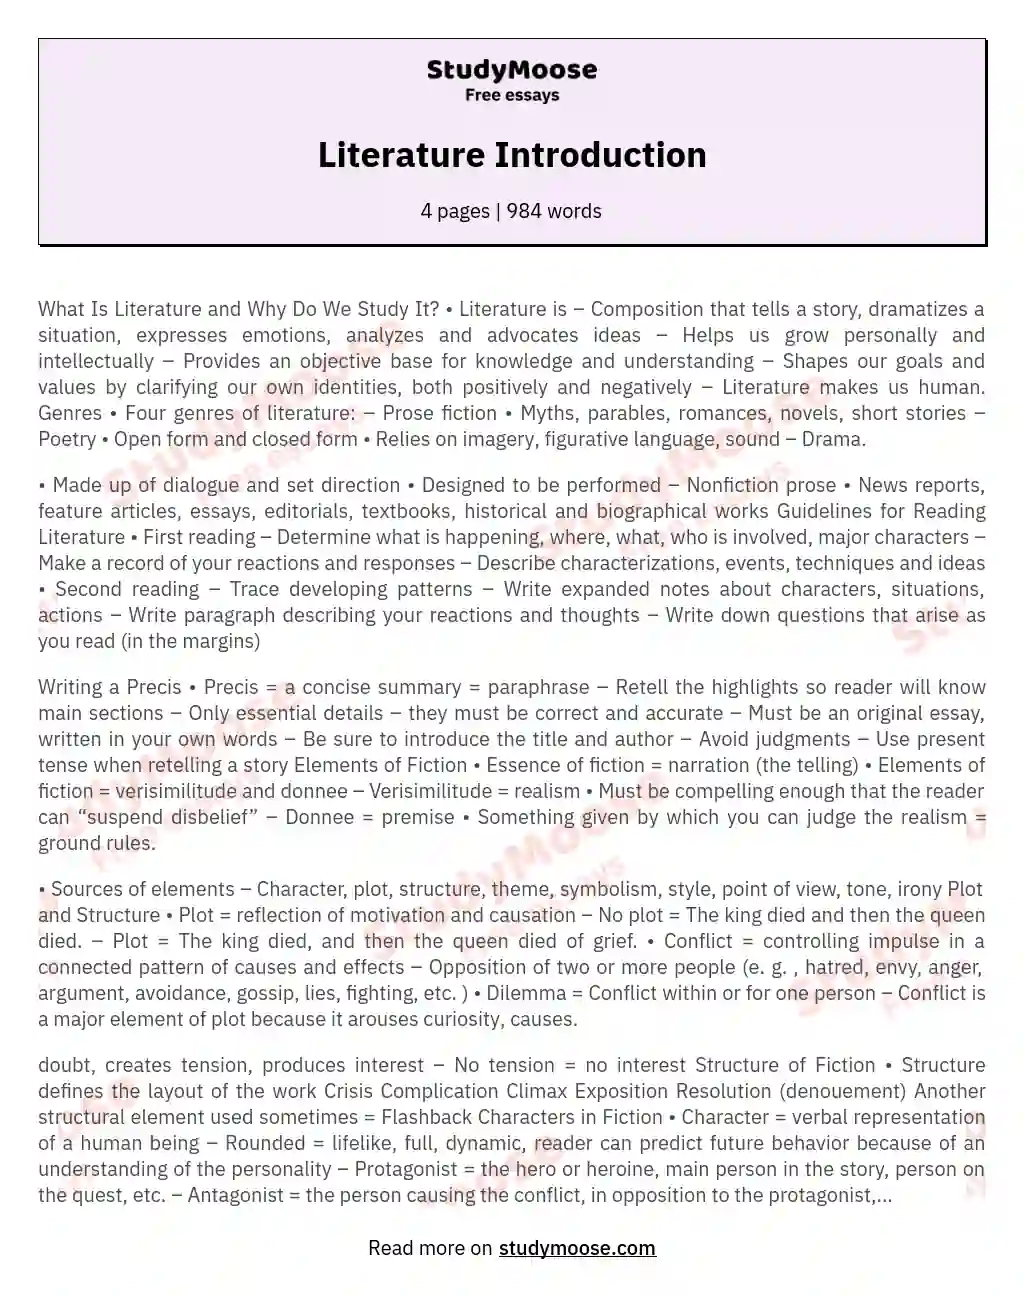 Literature Introduction essay